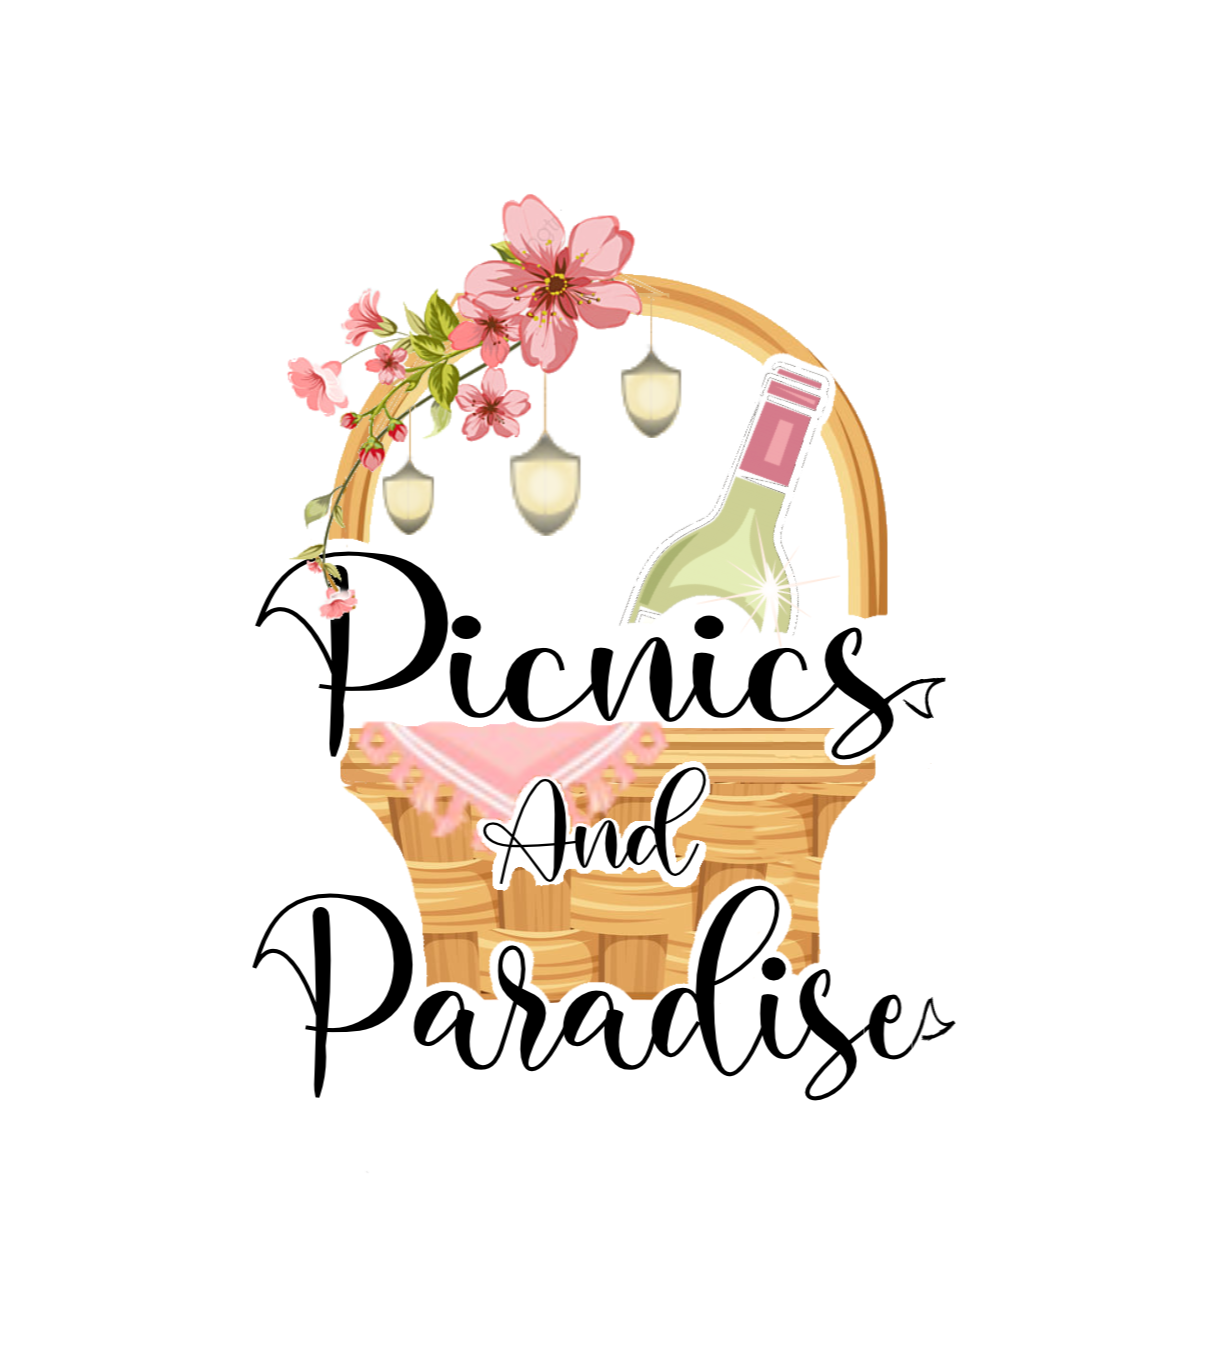 Picnics And Paradise